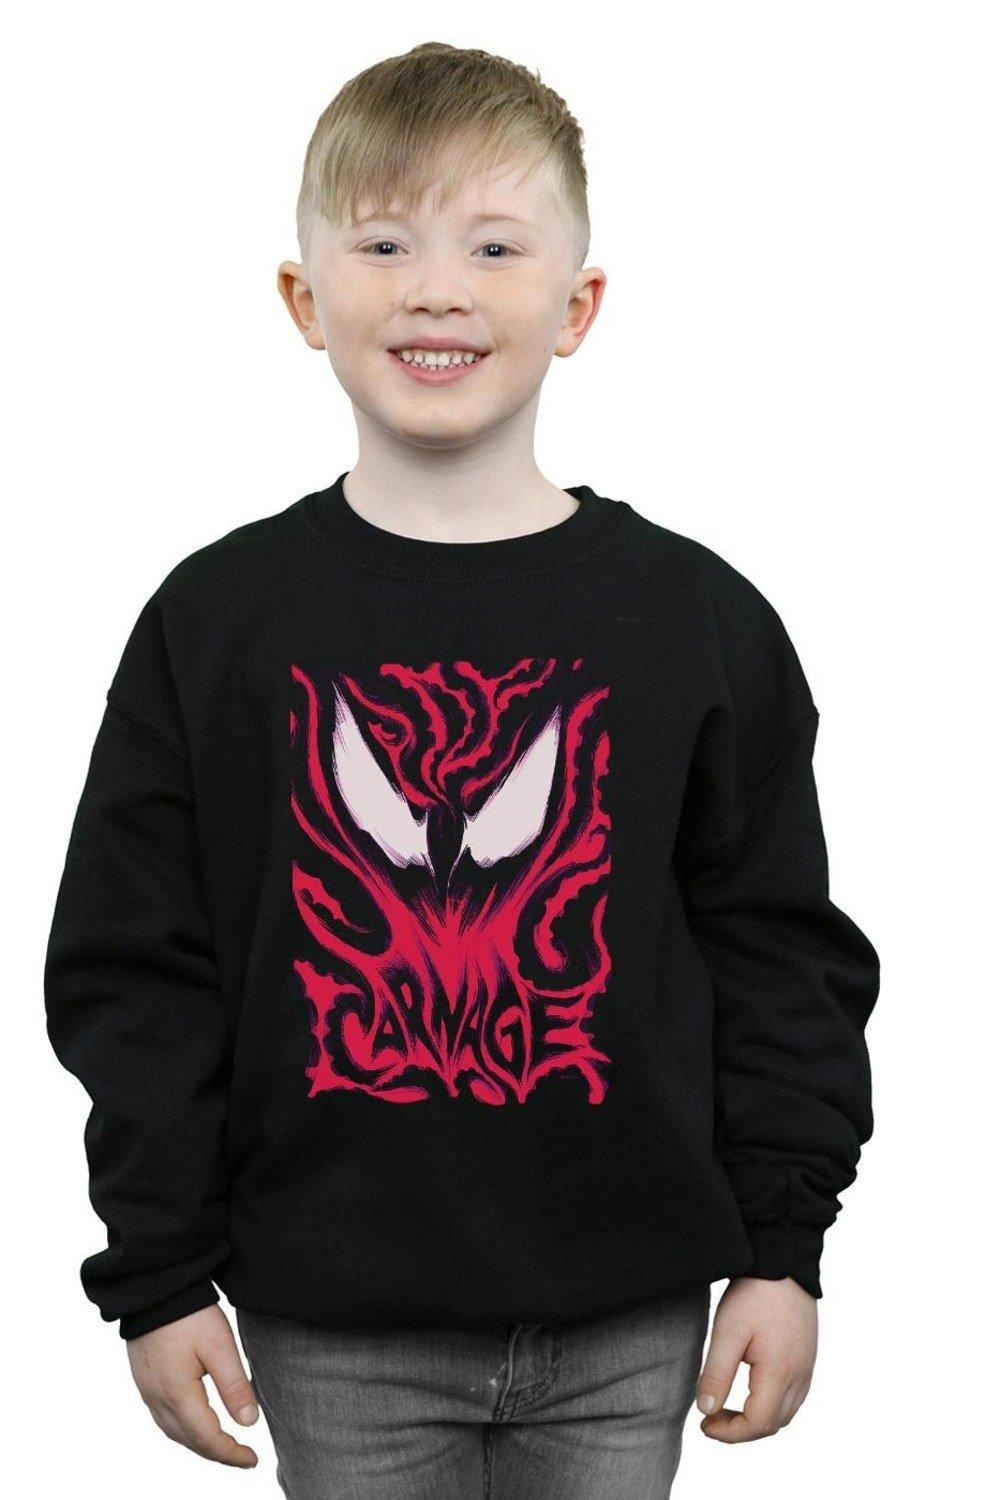 Venom Carnage Sweatshirt